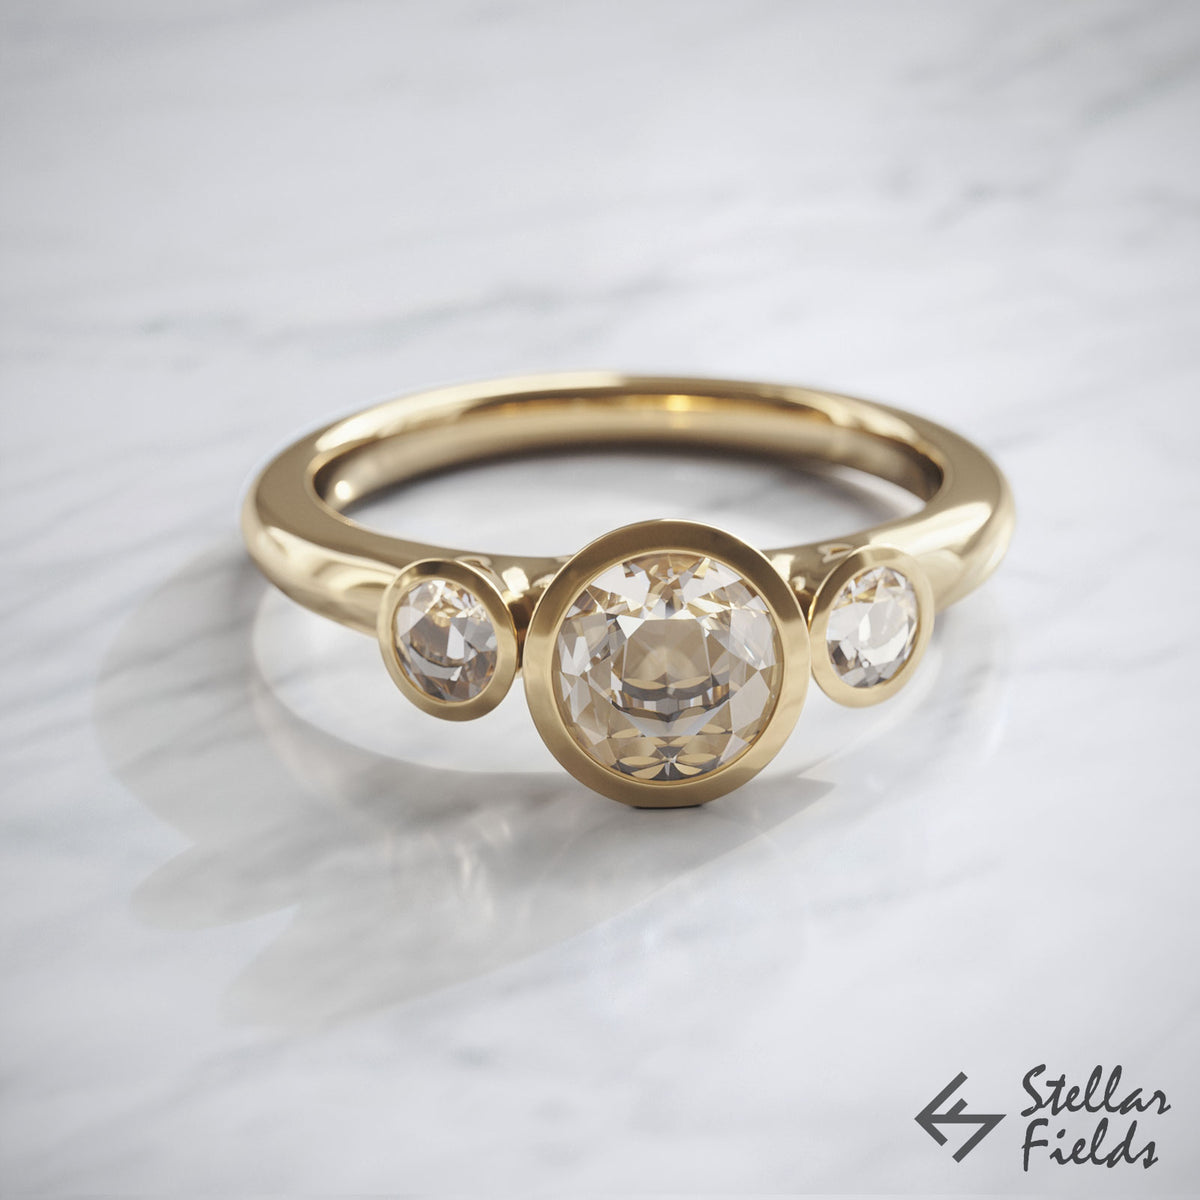 Tri Stone Diamond Bezel Engagement Ring Diamonds 14k Yellow Gold Stellar Fields Jewelry